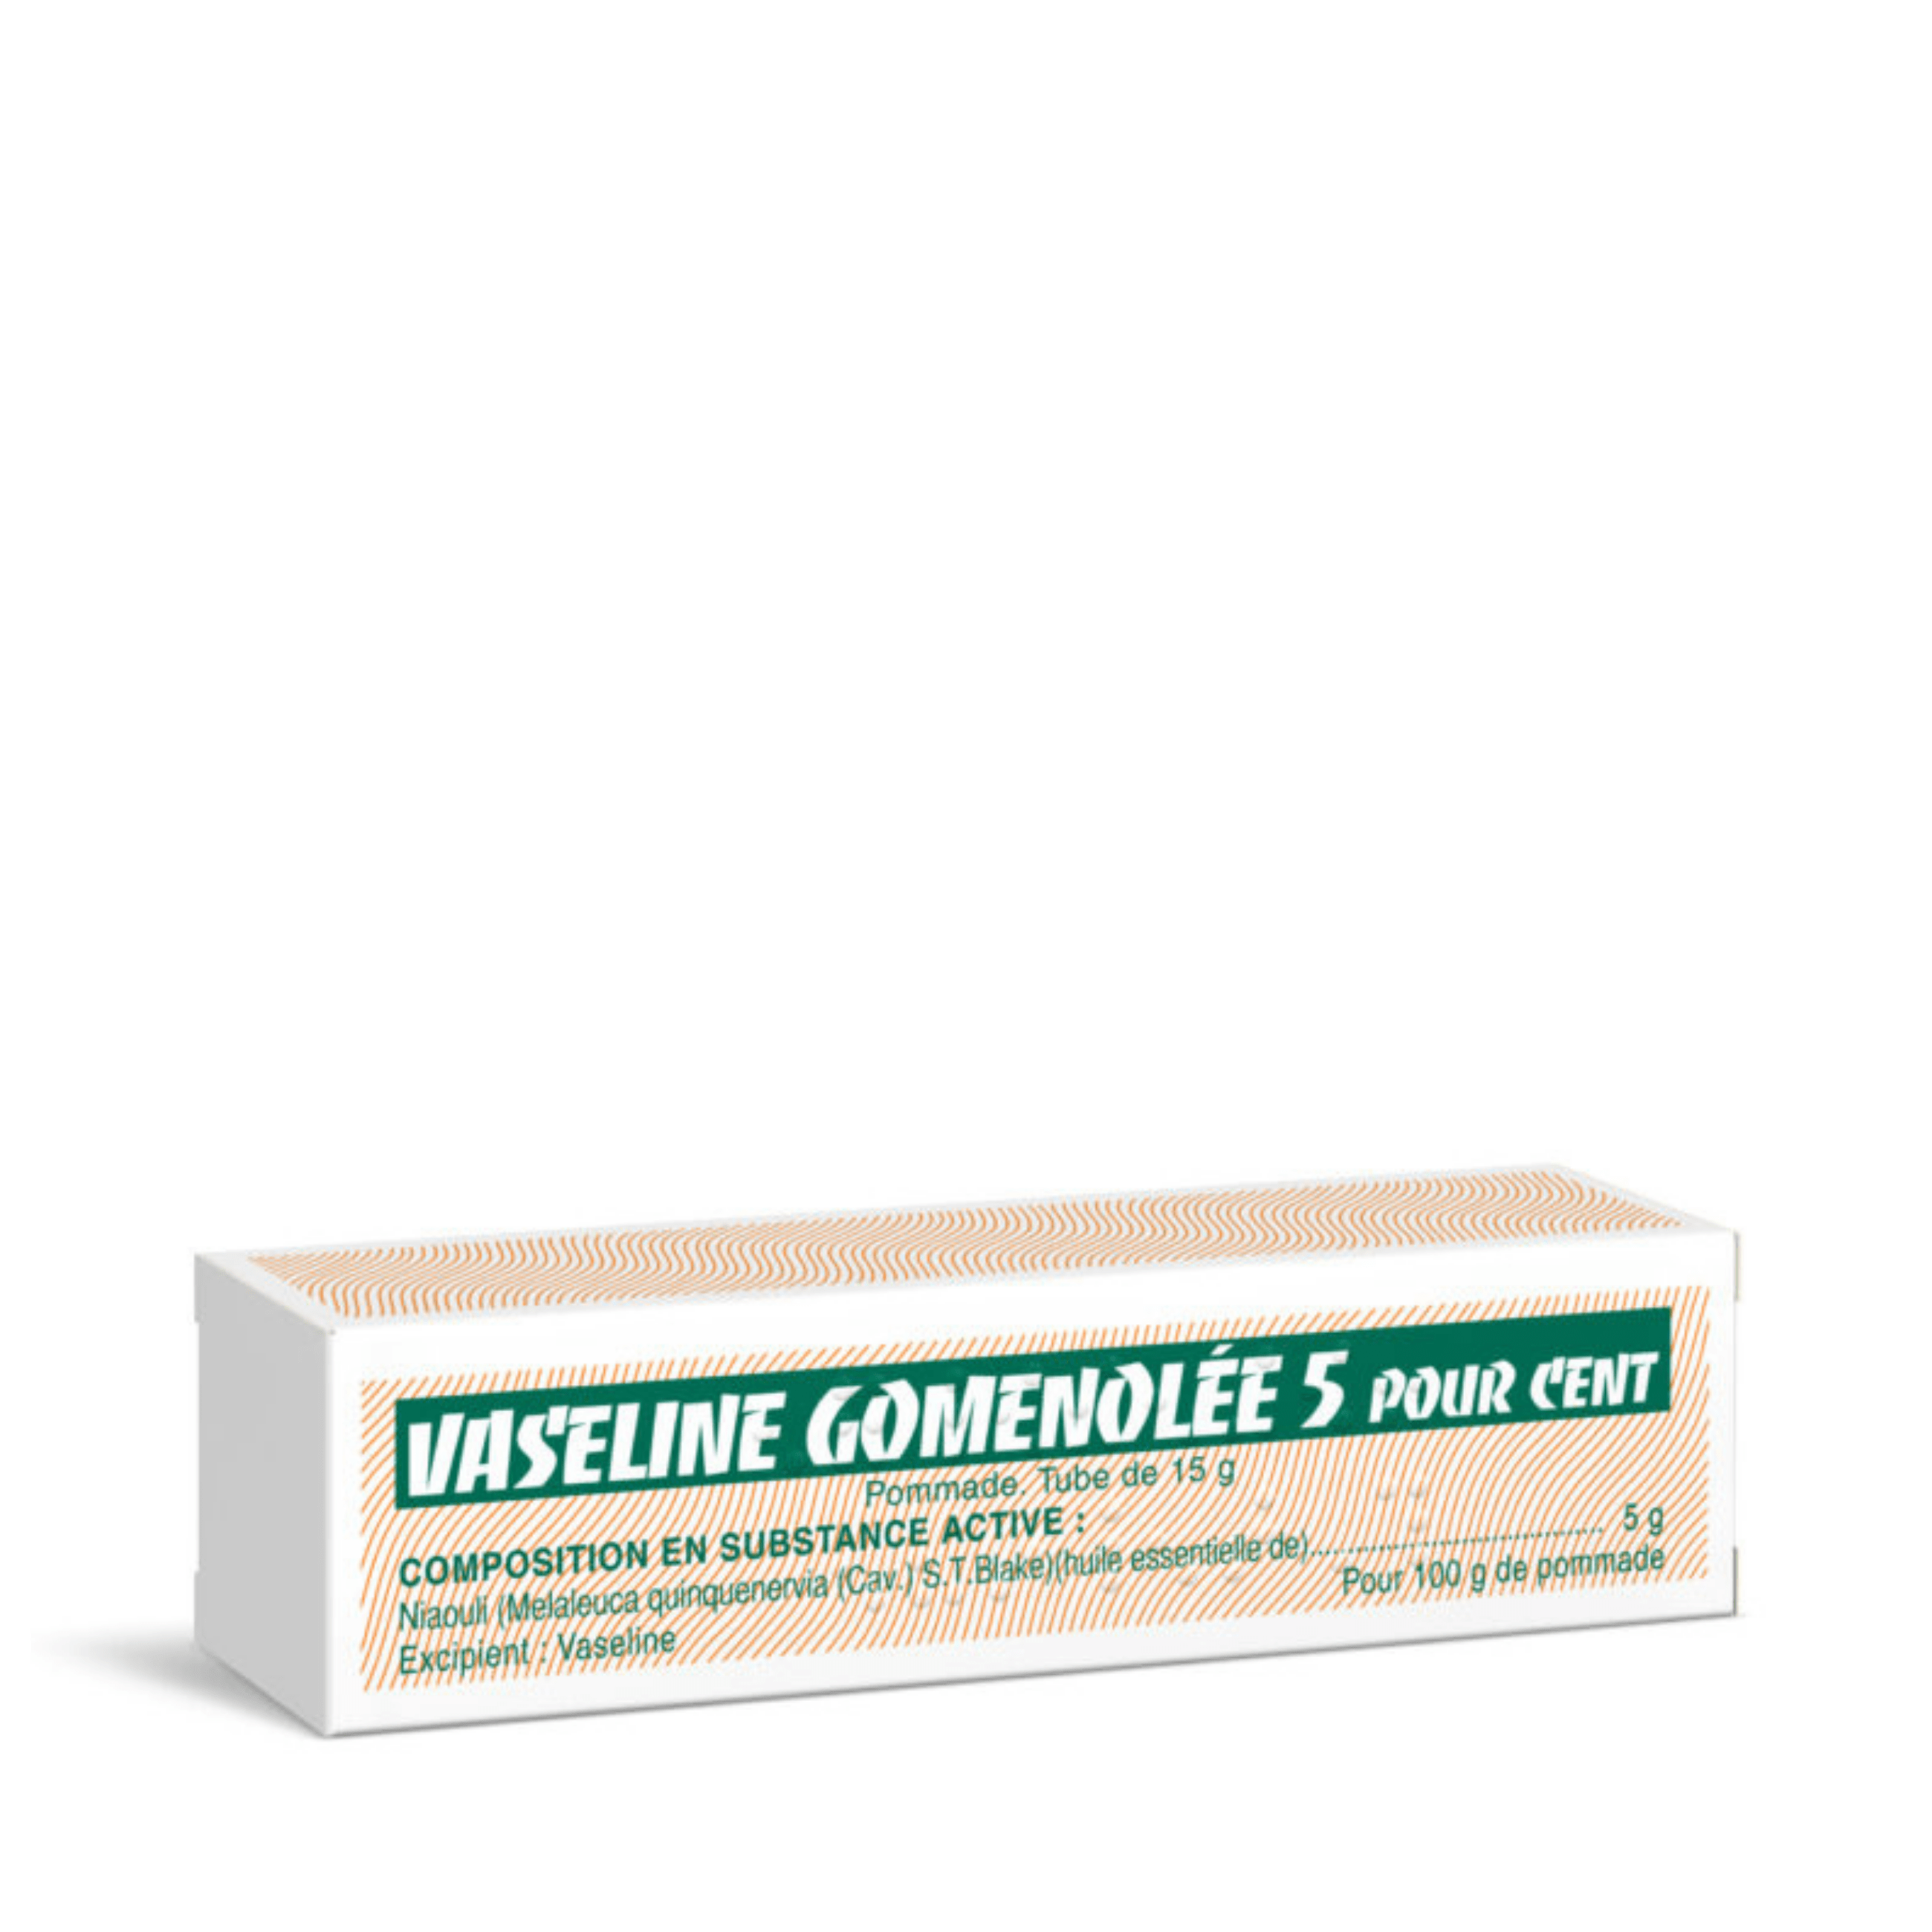 Vælg mandig skab Vaseline Gomenolée 5% Laboratory CCD antiseptic nasal preparation